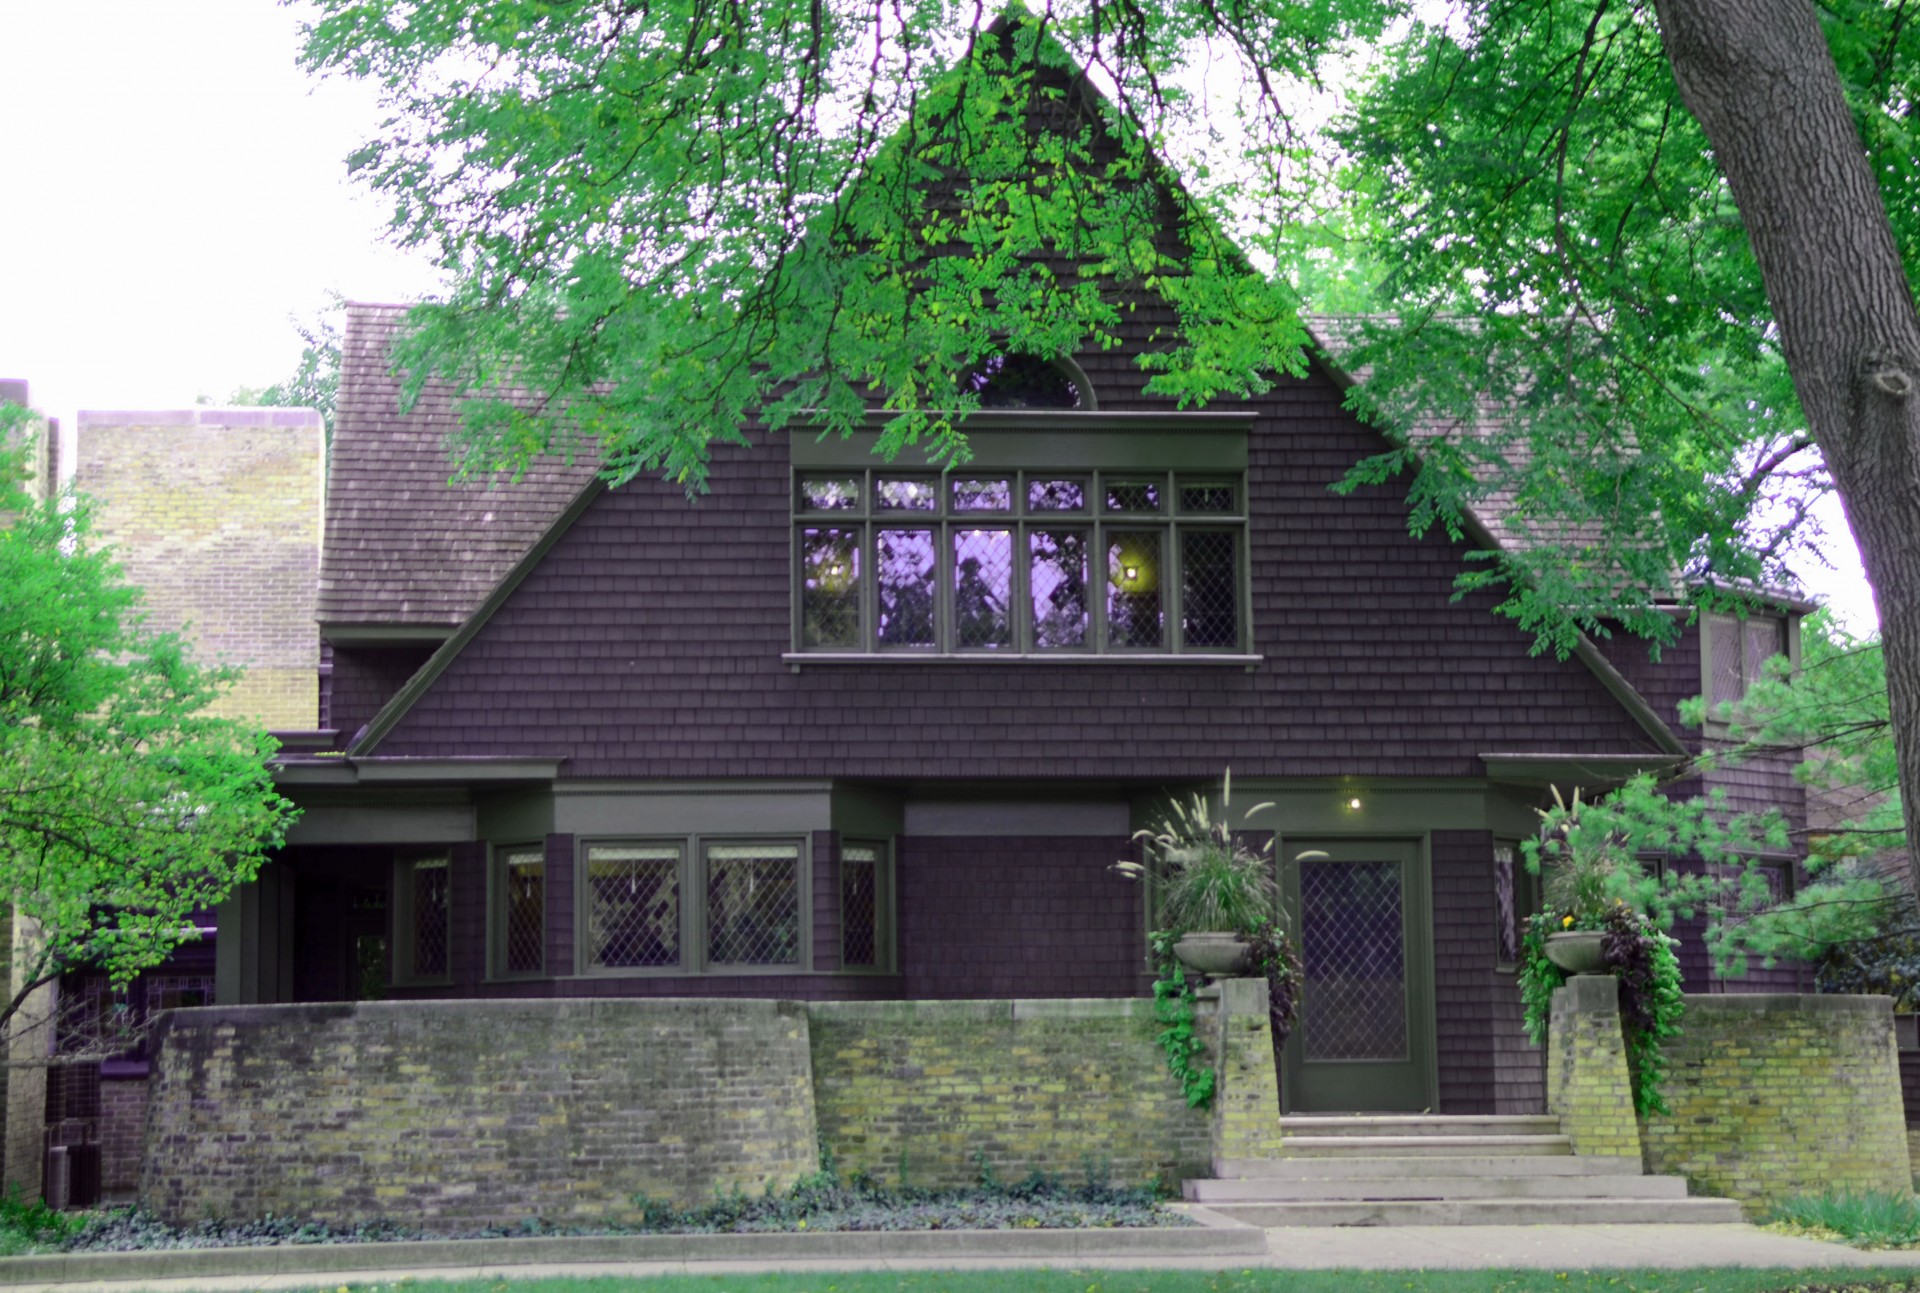 Frank Lloyd Wright Home, 951 Chicago Ave., Oak Park